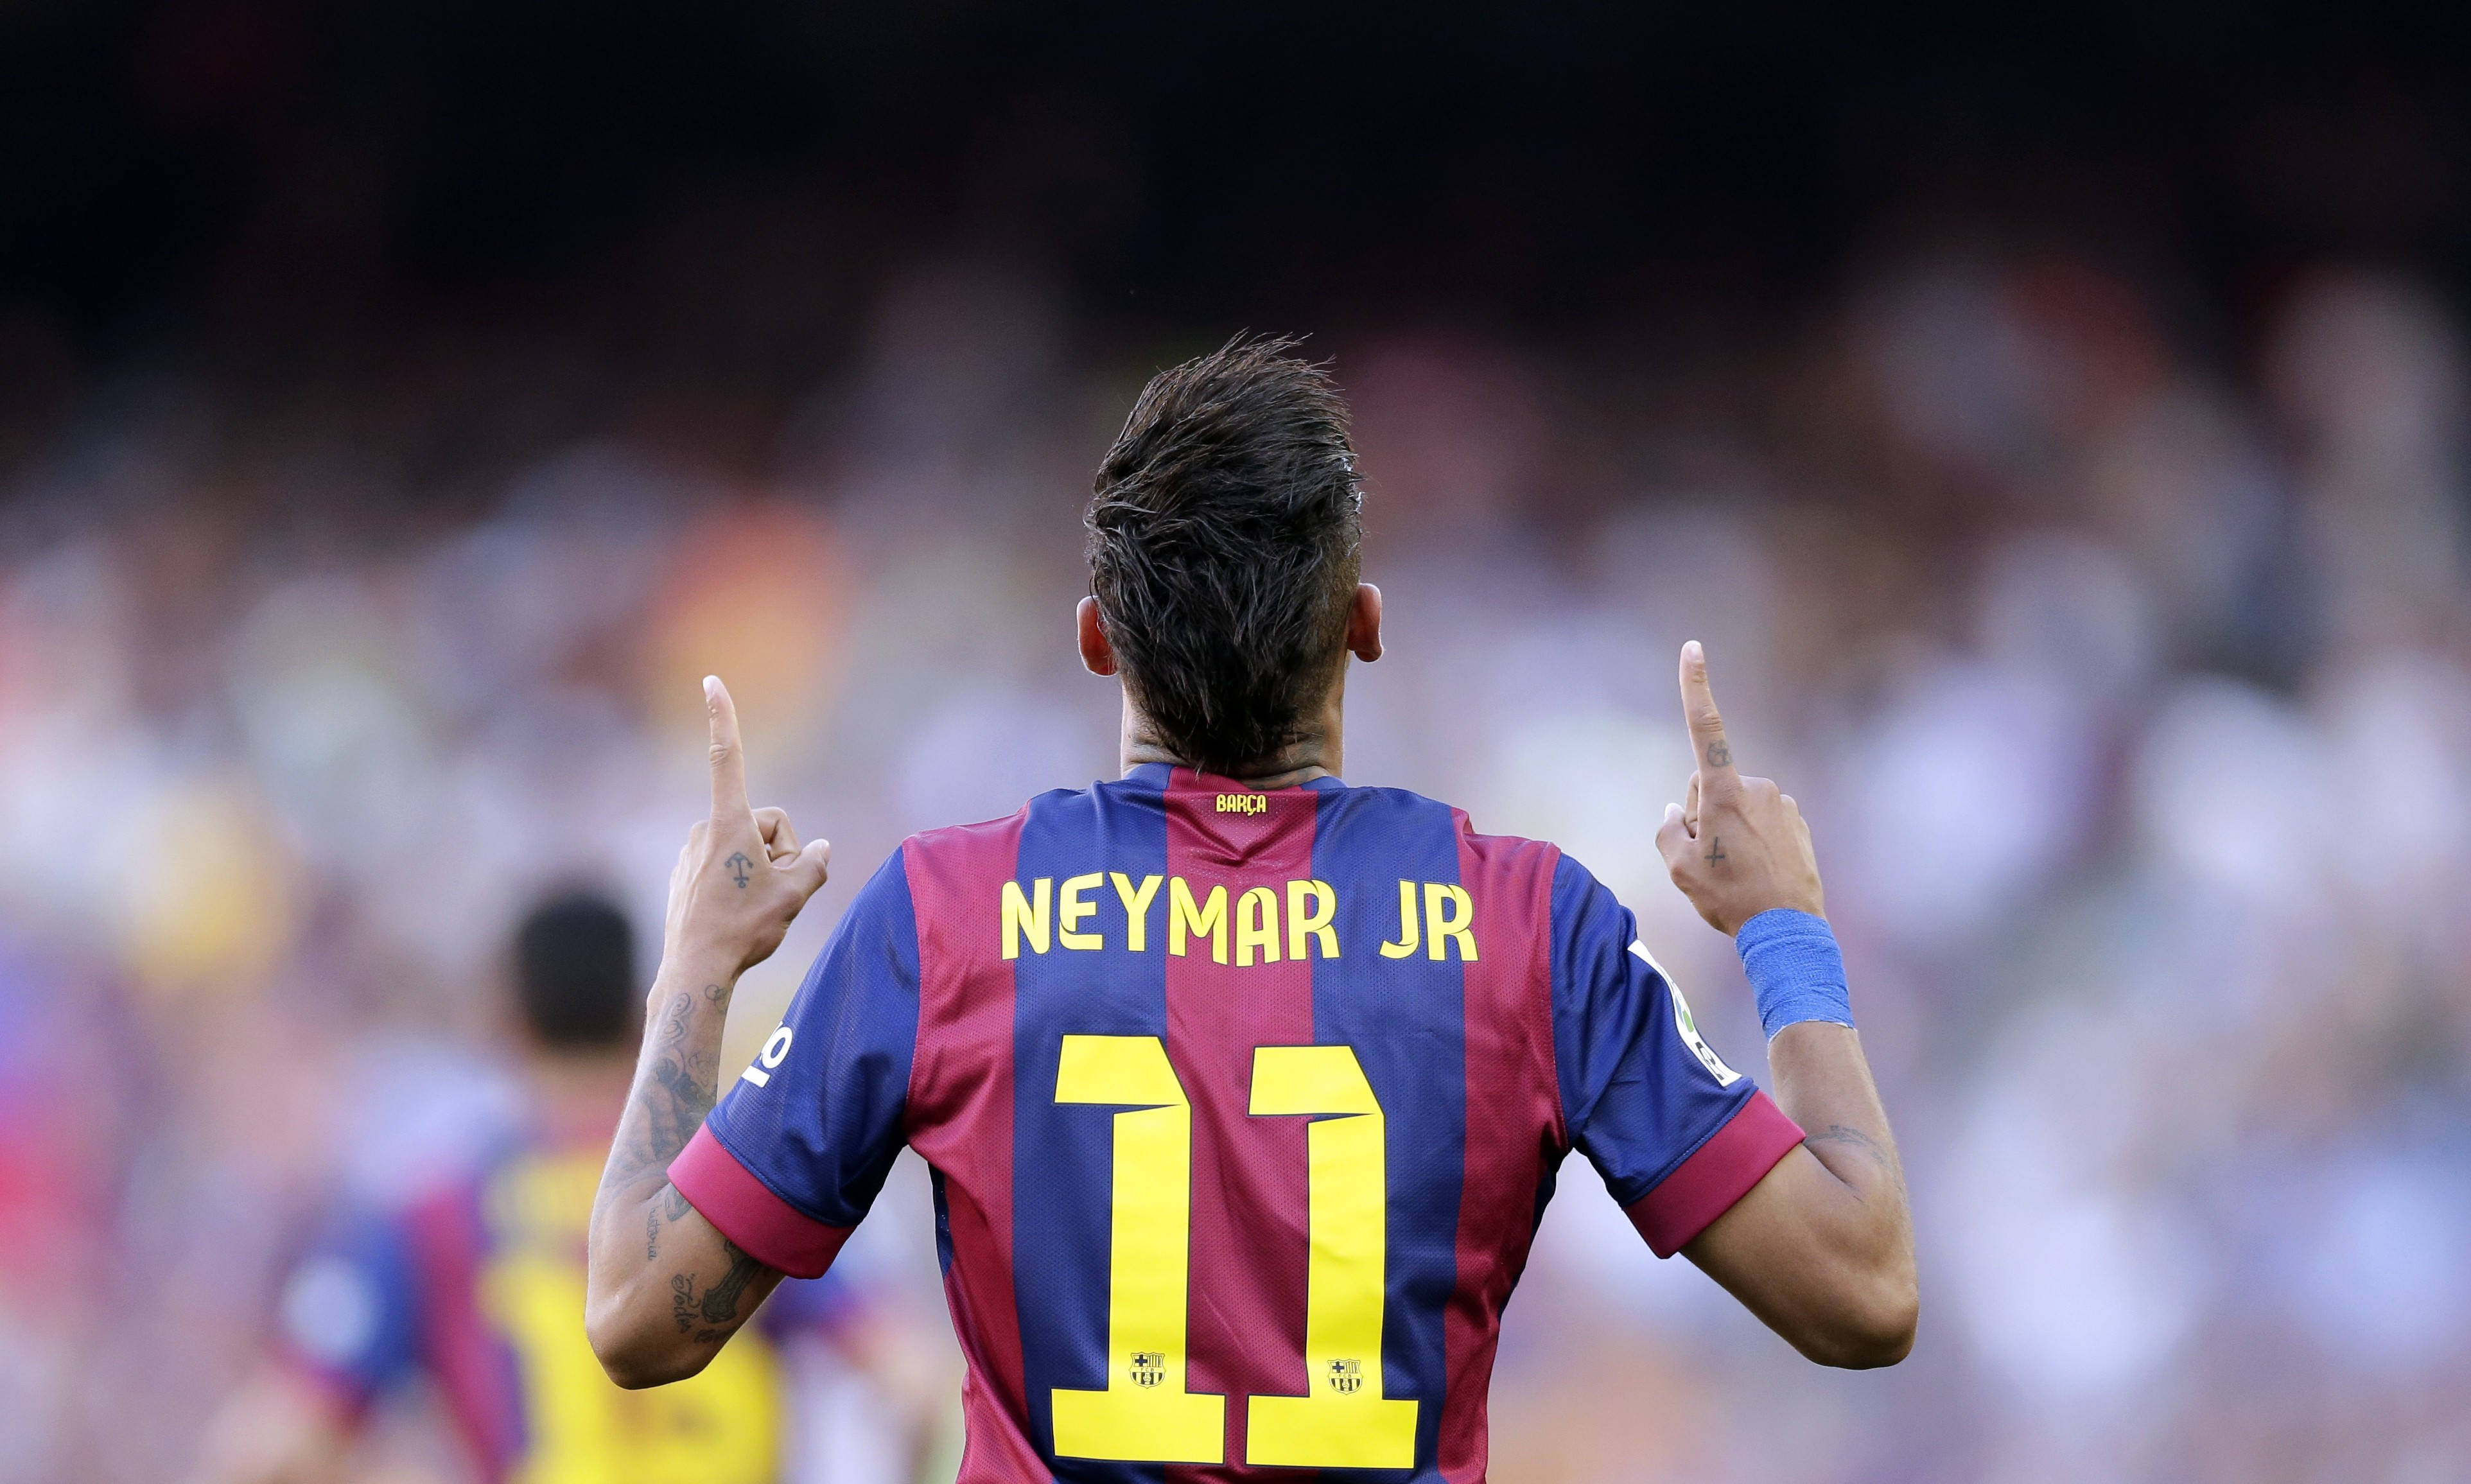 Cool Neymar Jr Number 11 Jersey Wallpaper